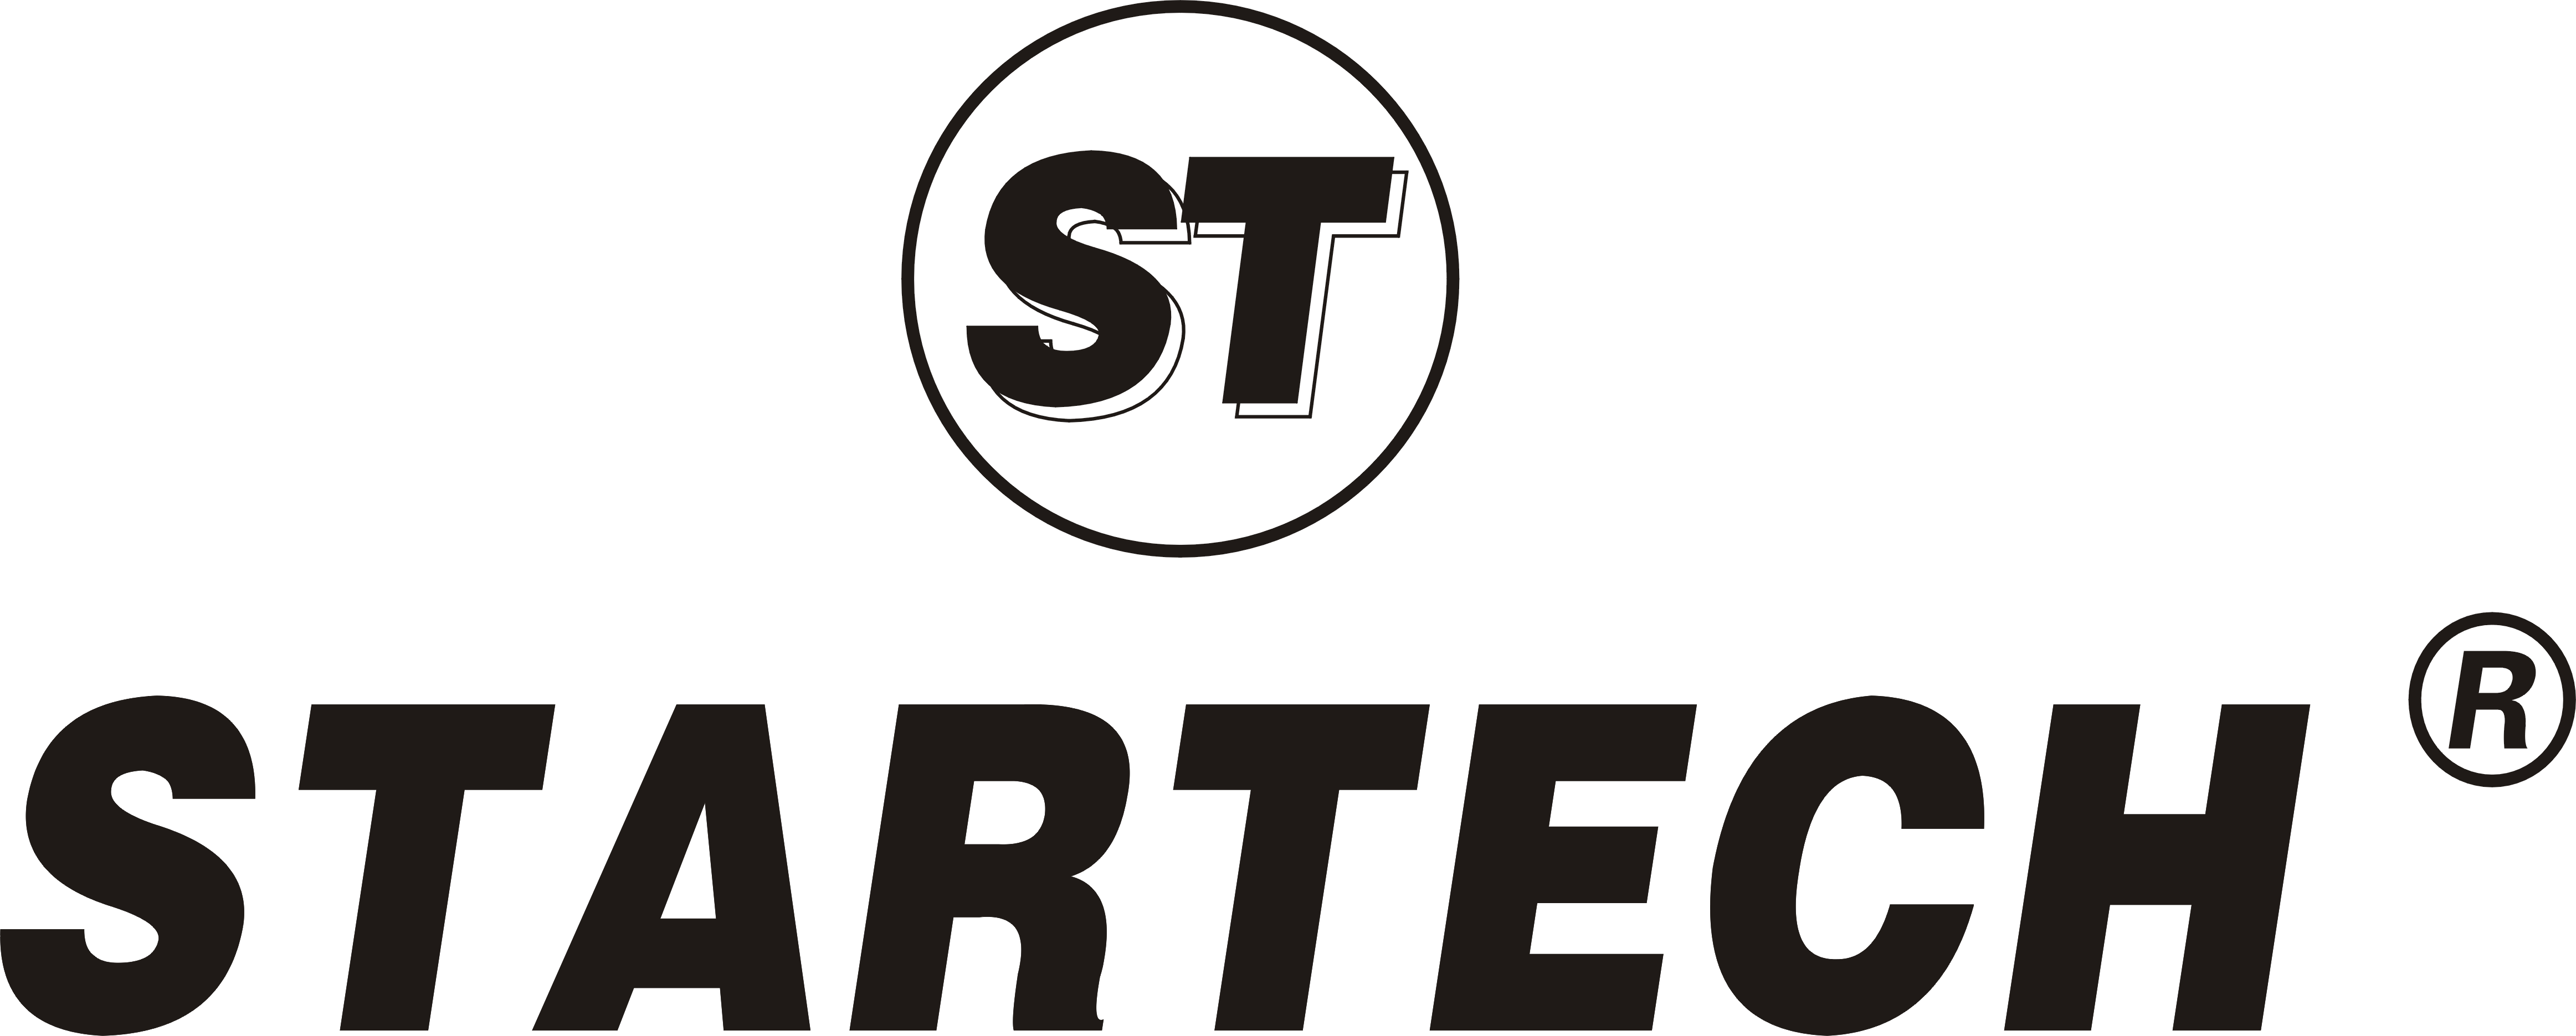 StarTech Logo - File:Staretch logo.png - Wikimedia Commons